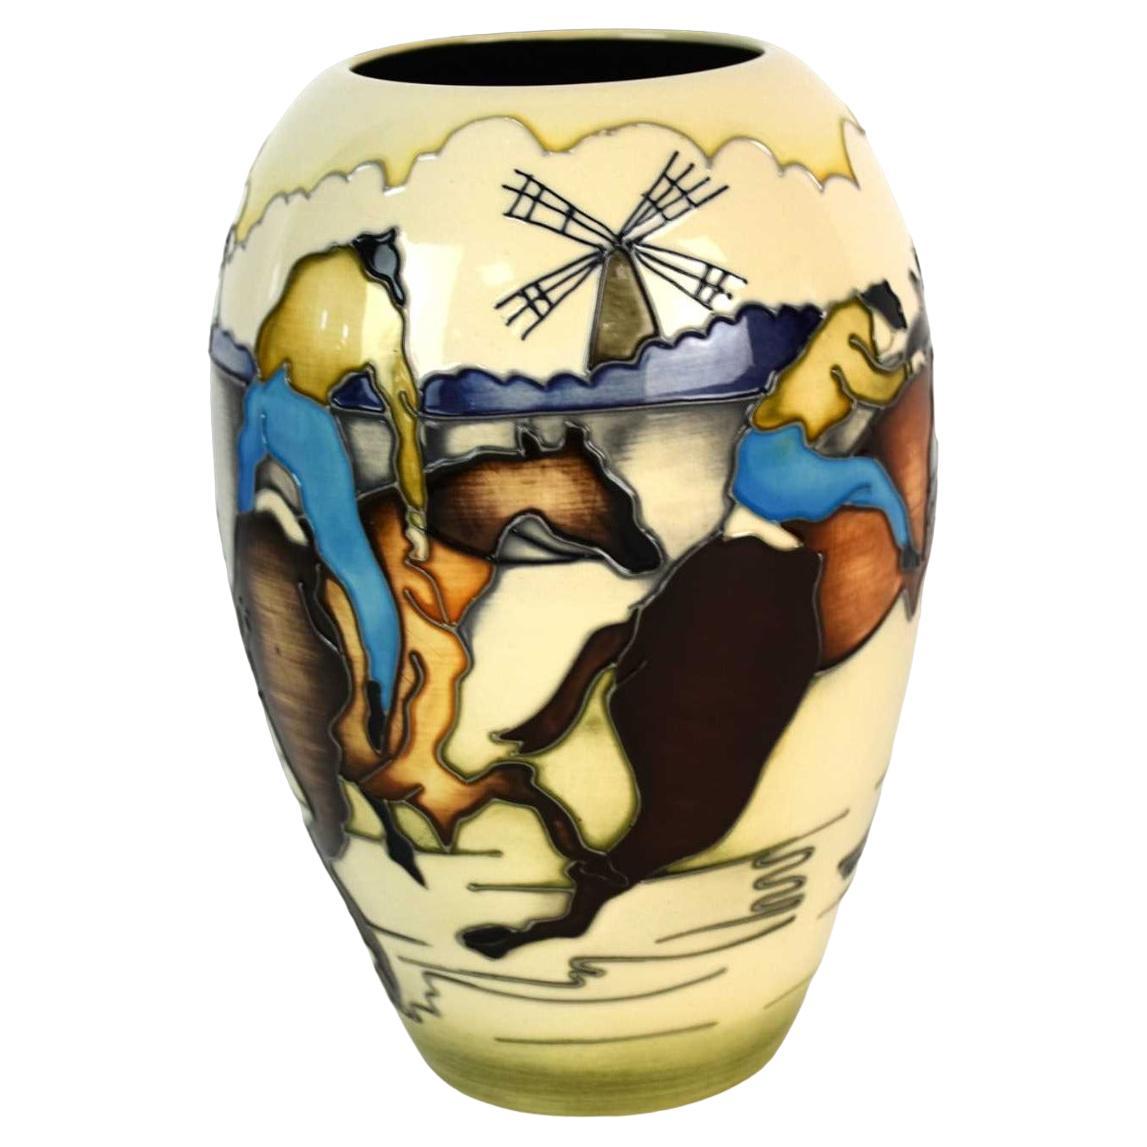 LIMITIERTE Ausgabe  MOORCROFT Kunstkeramik-Vase, entworfen von Kerry Goodwin BOXED